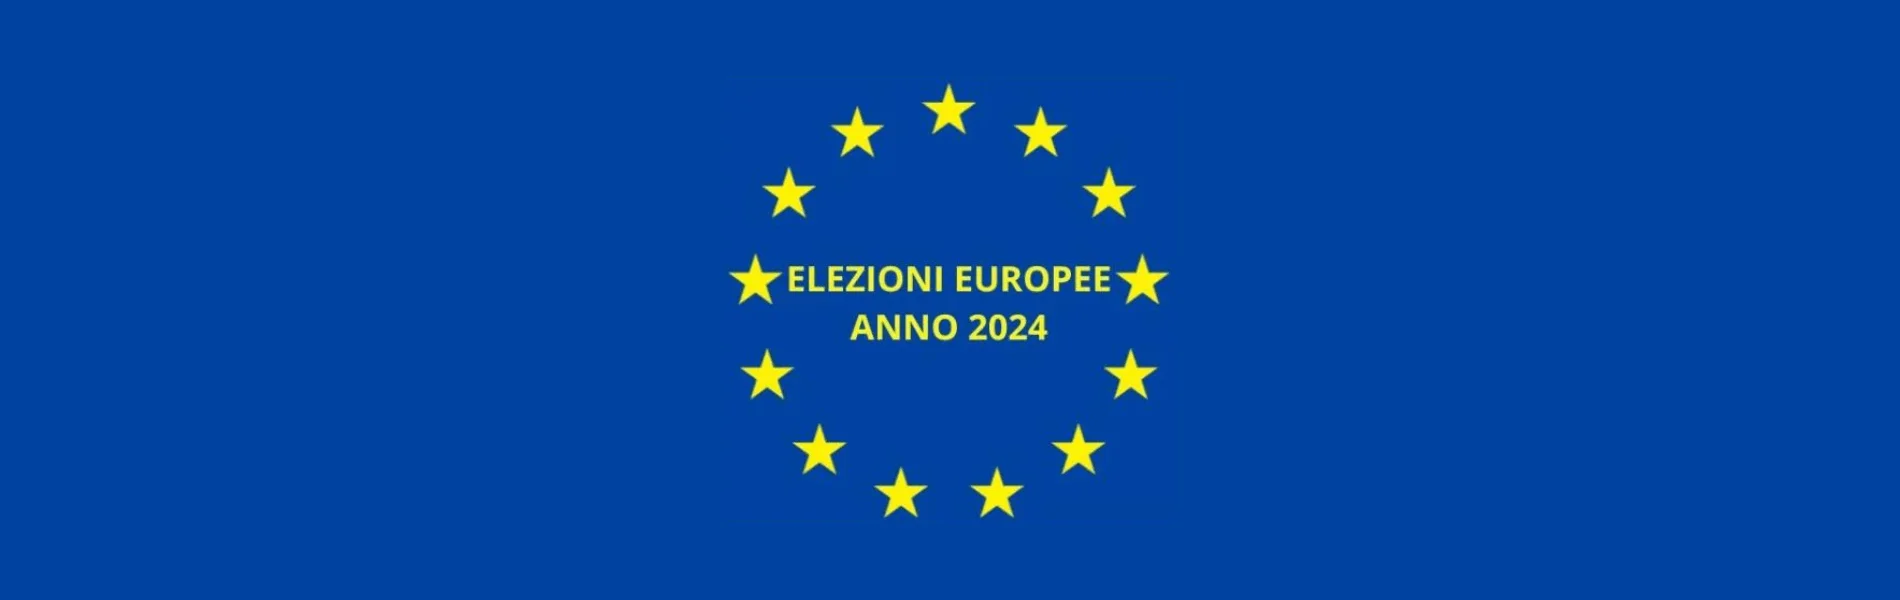 Elezioni Europee 1